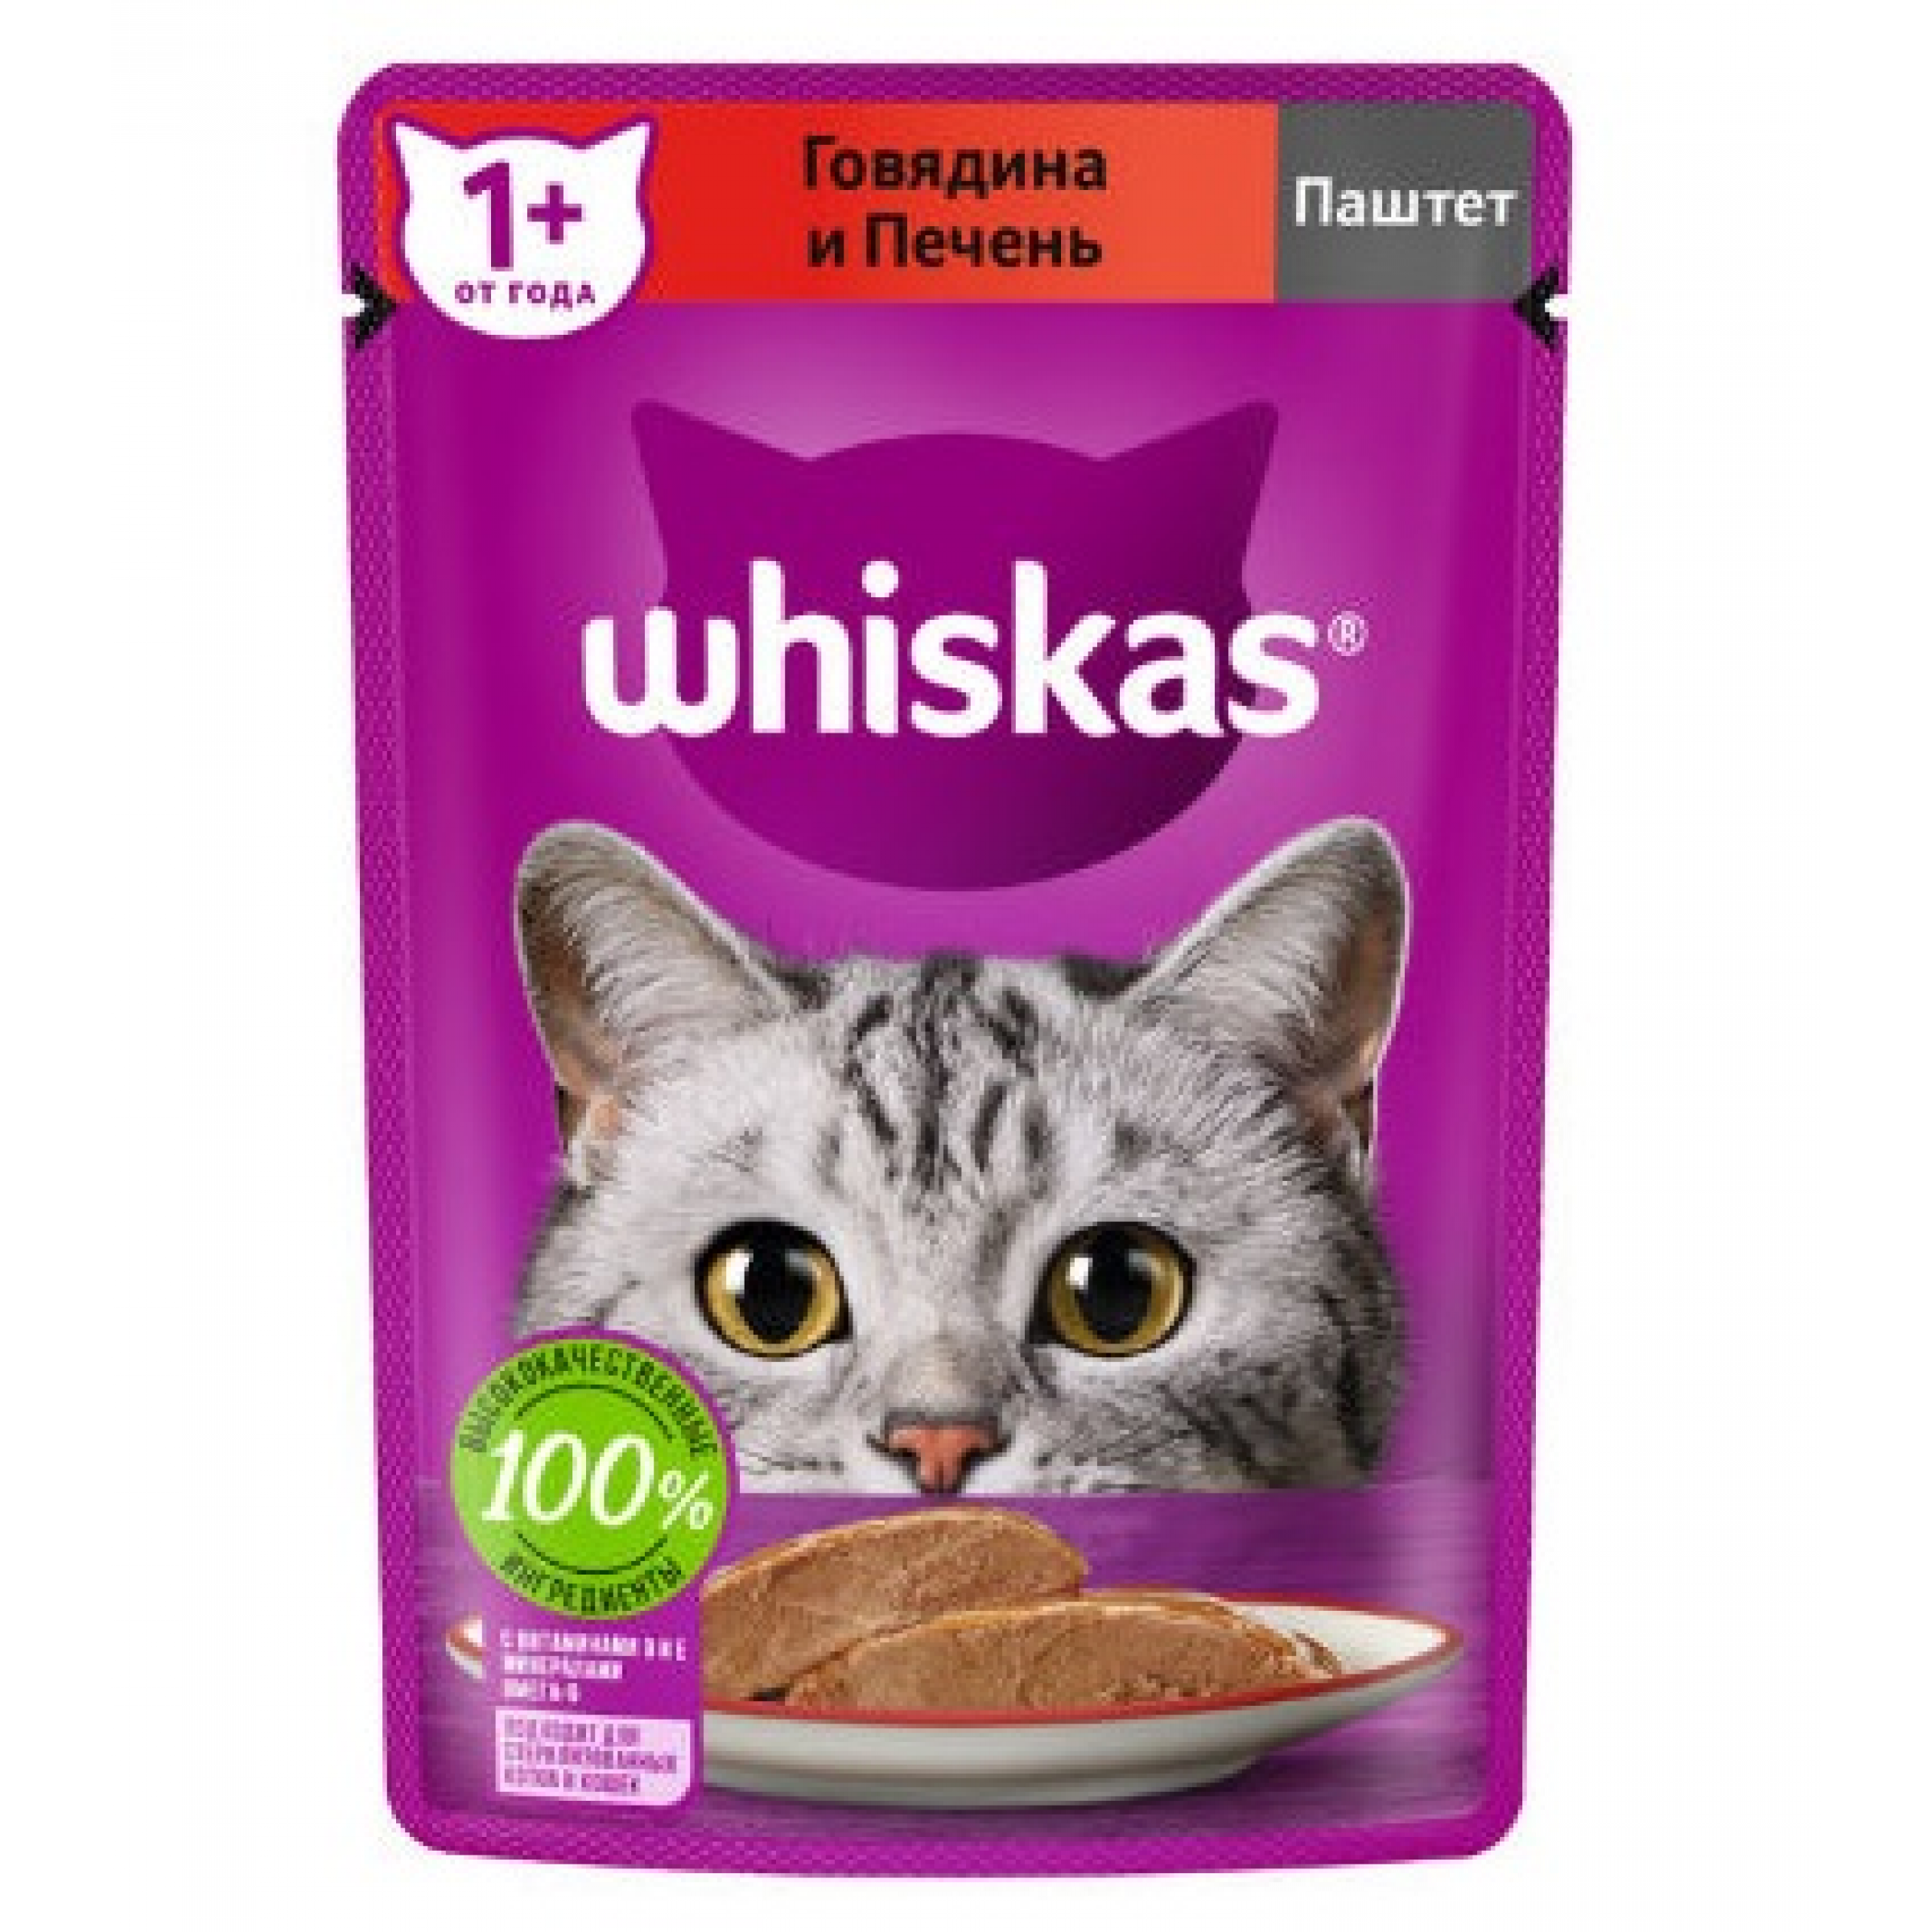 Корм для кошек Whiskas, паштет говядина/печень, 75 г